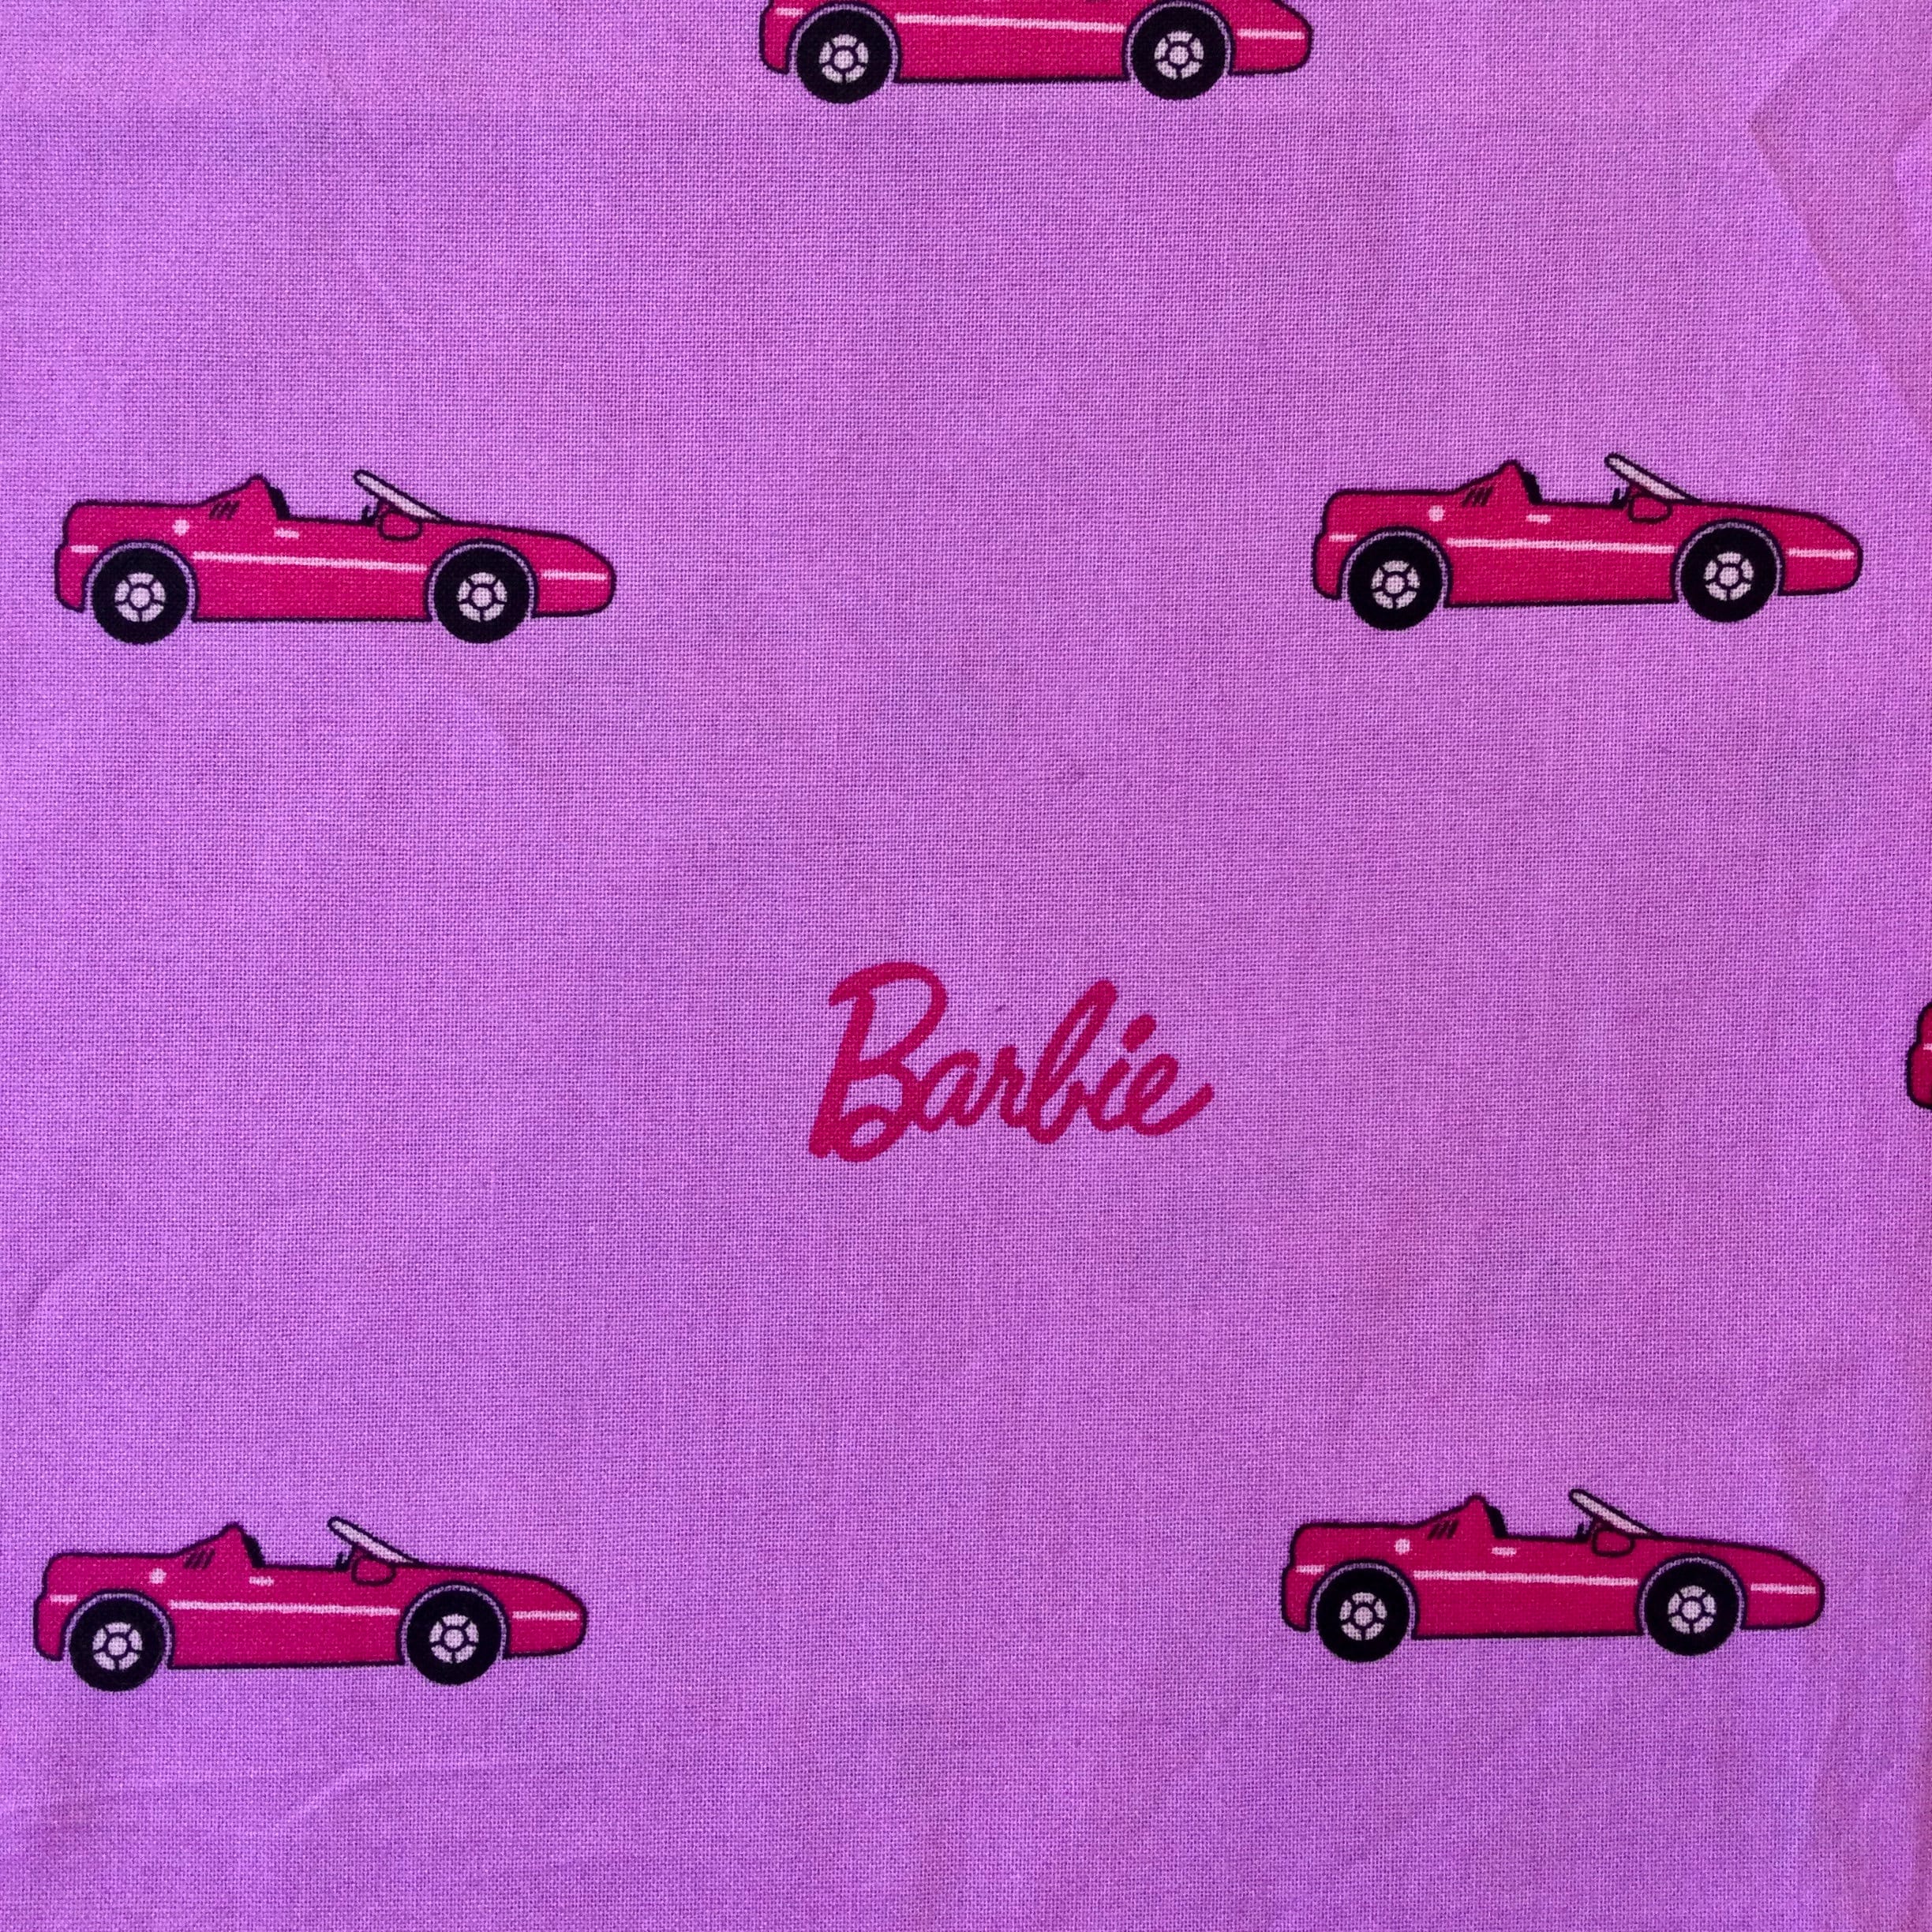 Barbie car character fabric